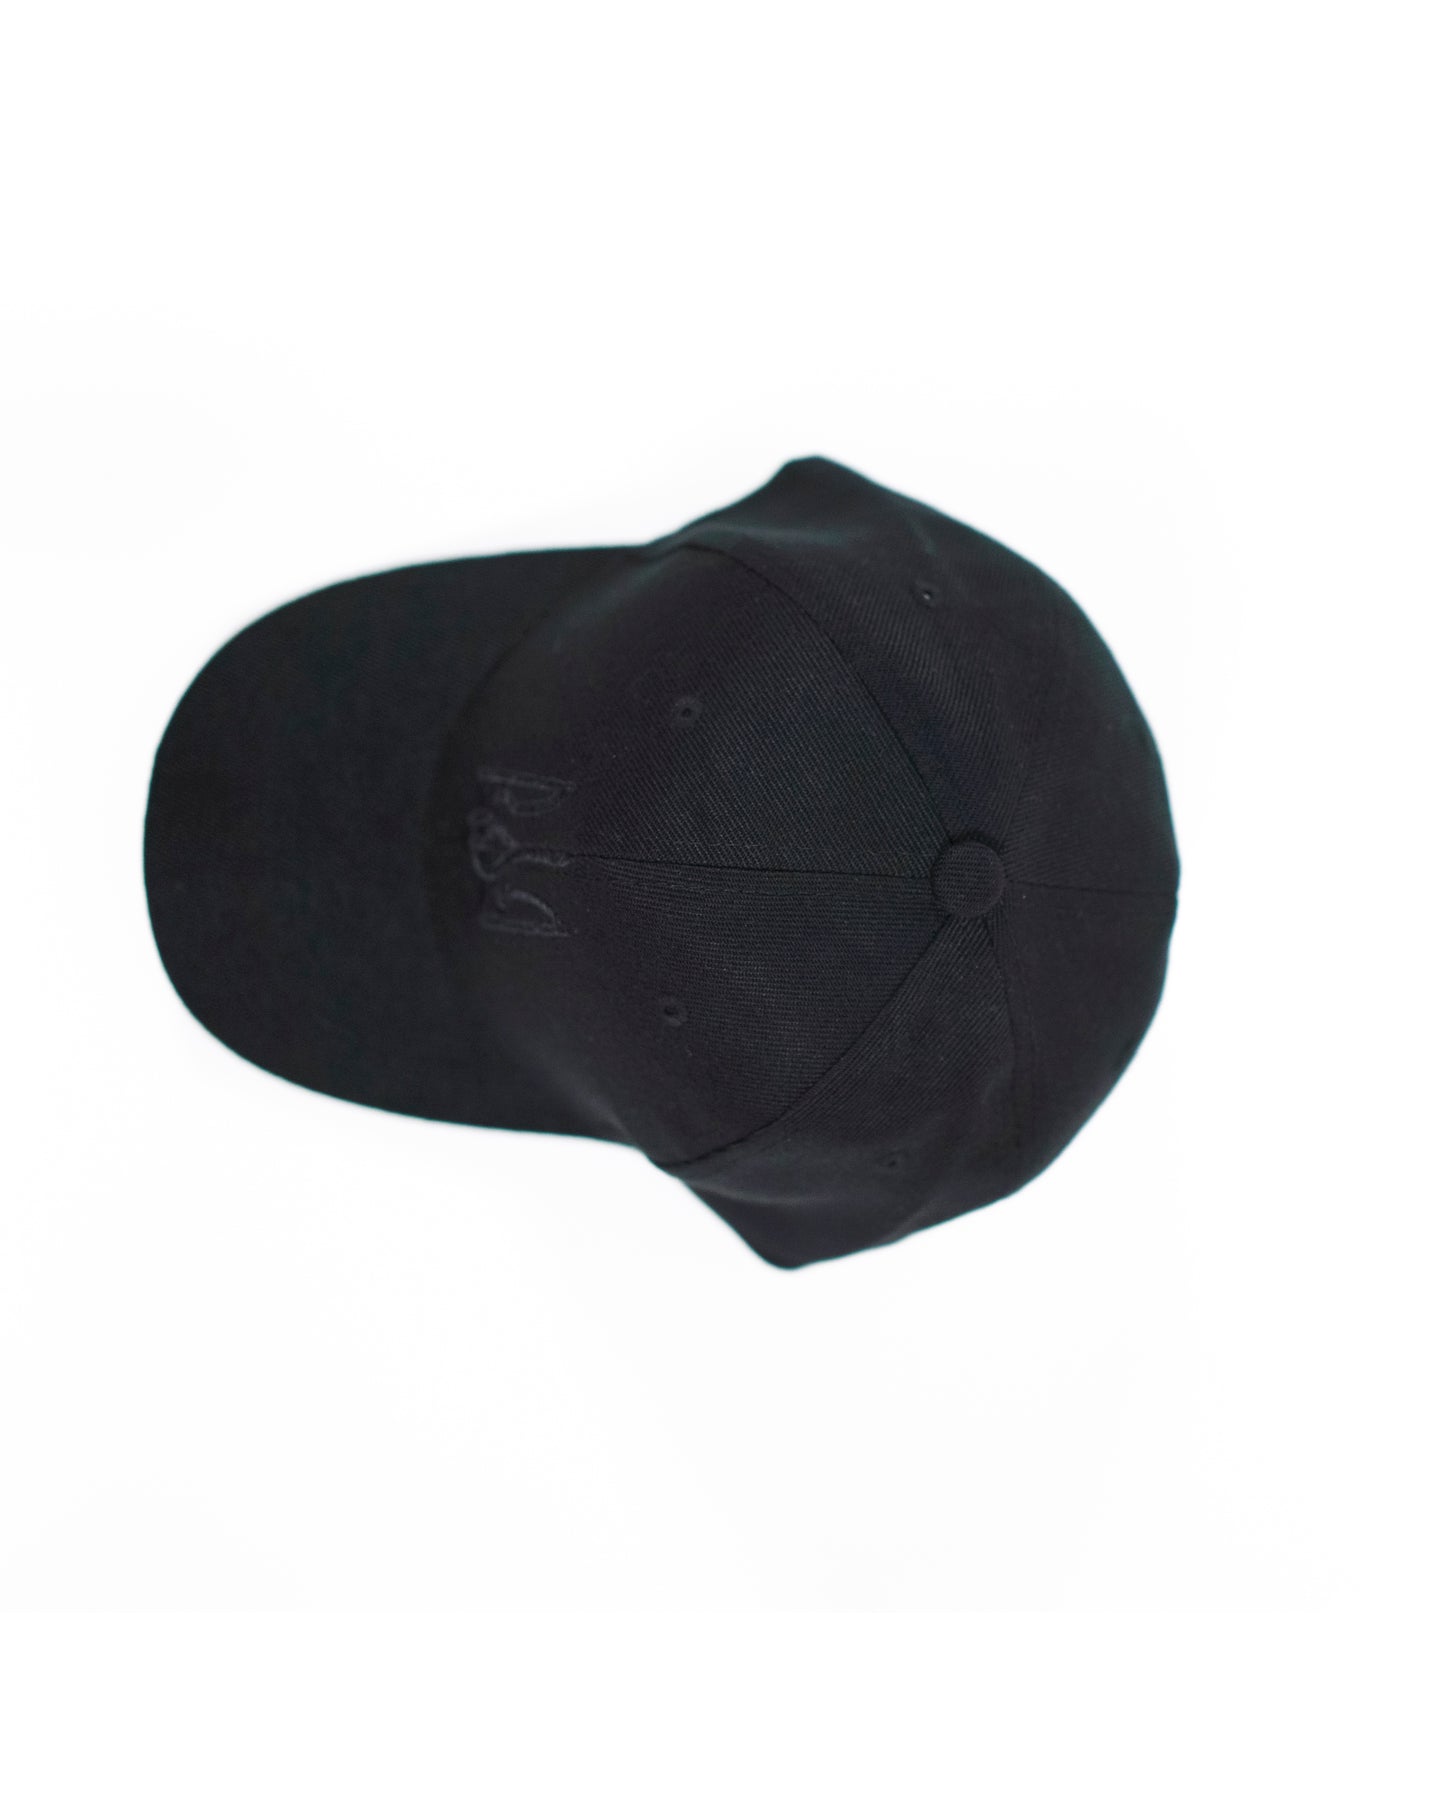 Cap with Black Embroidered Truzyb | Ukrainian Trident Cap